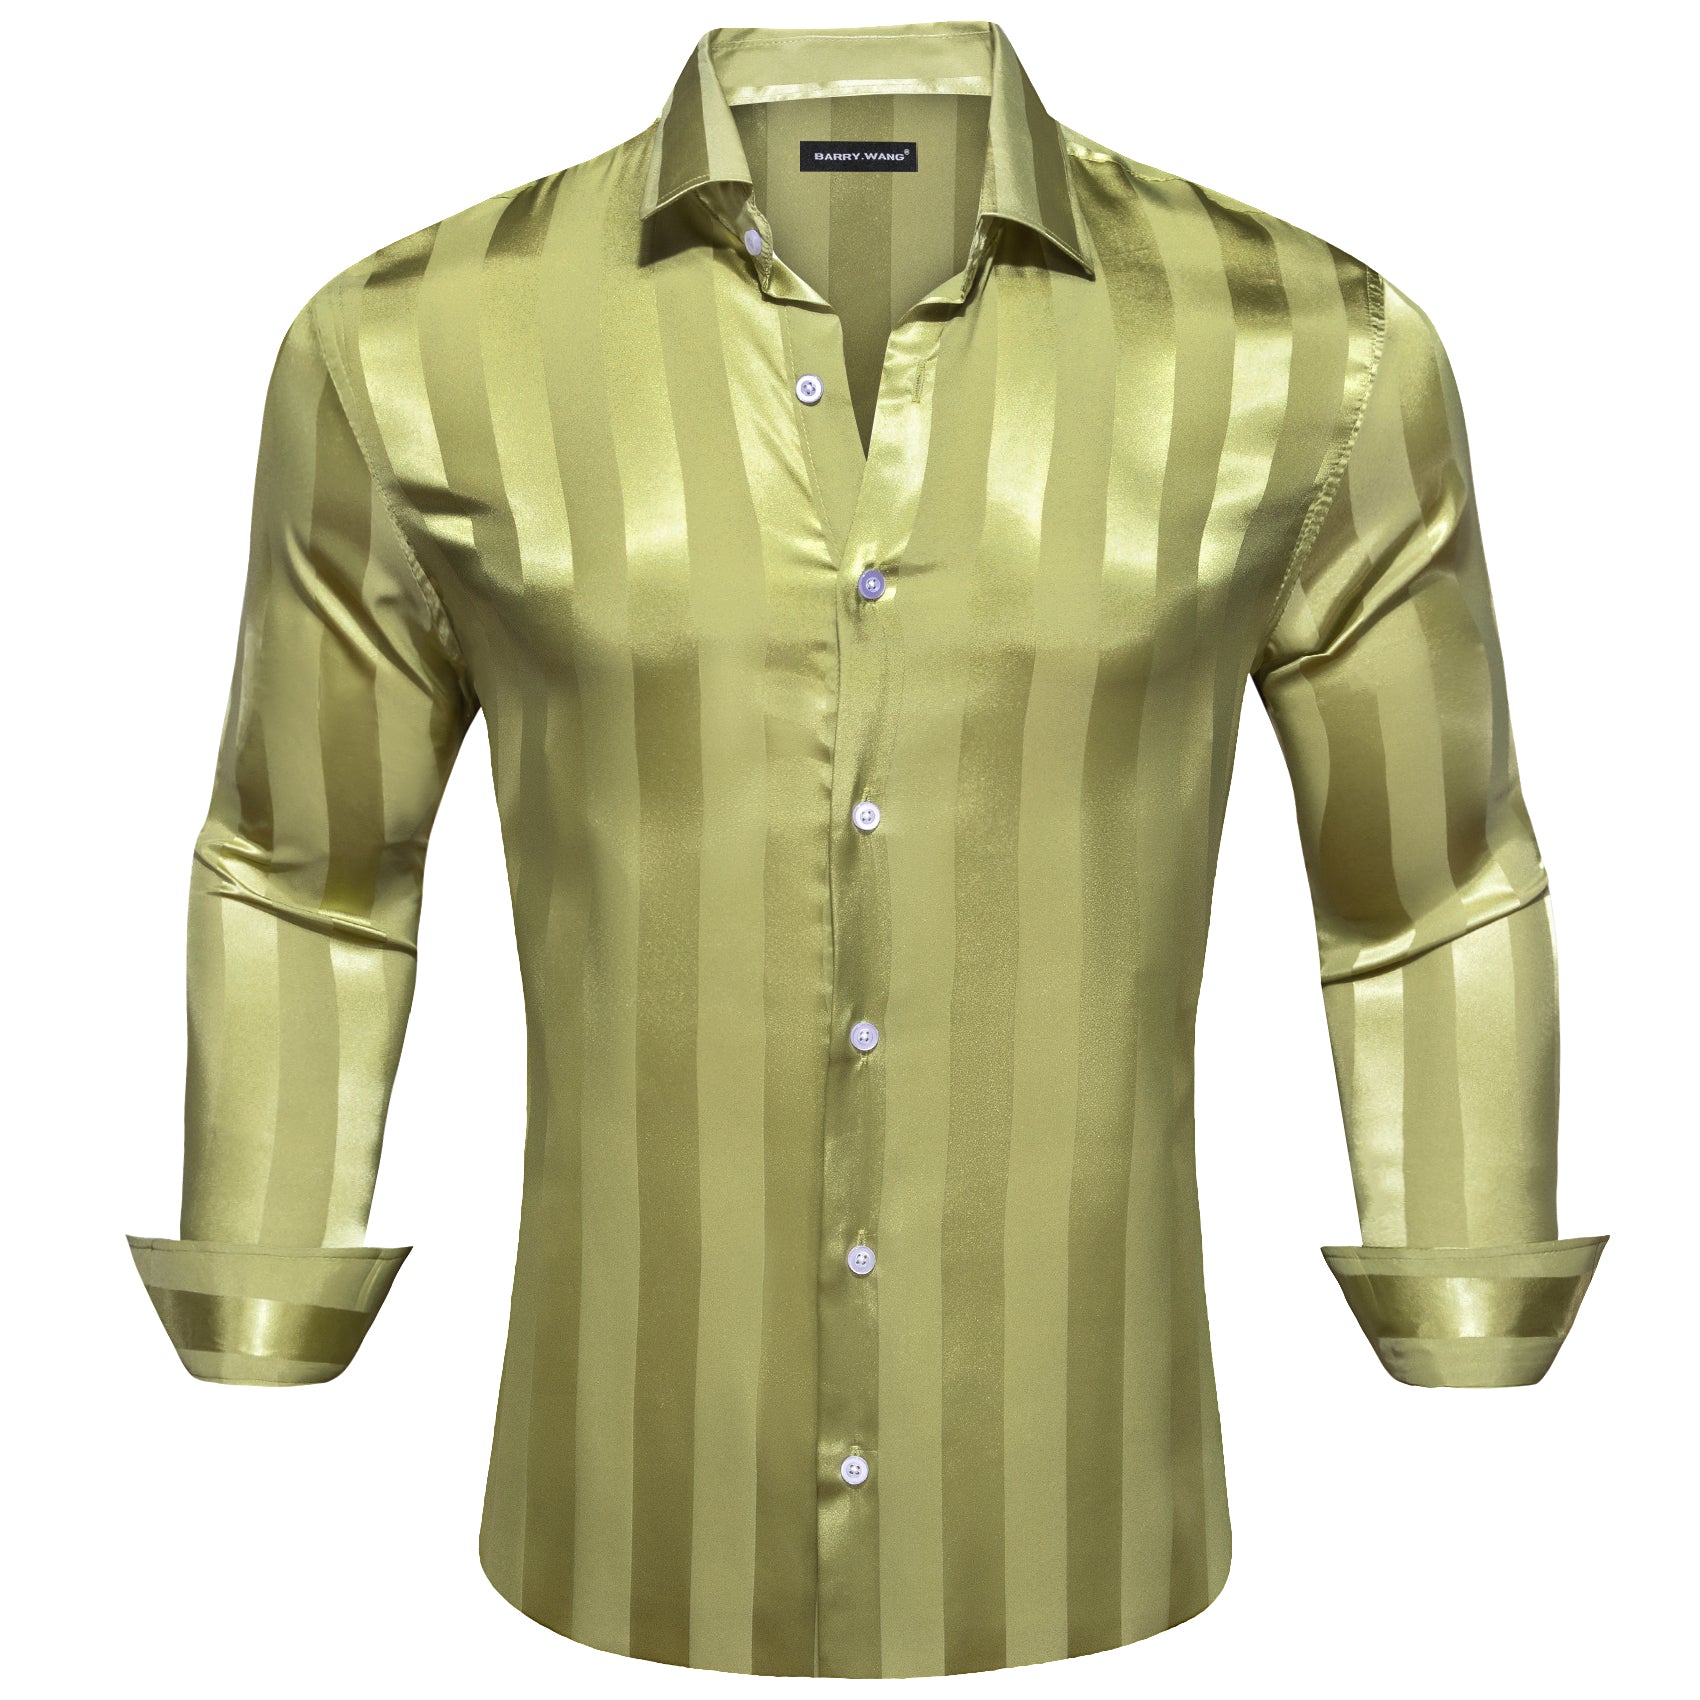 Barry.wang Yellow Green Striped Silk Men's Shirt